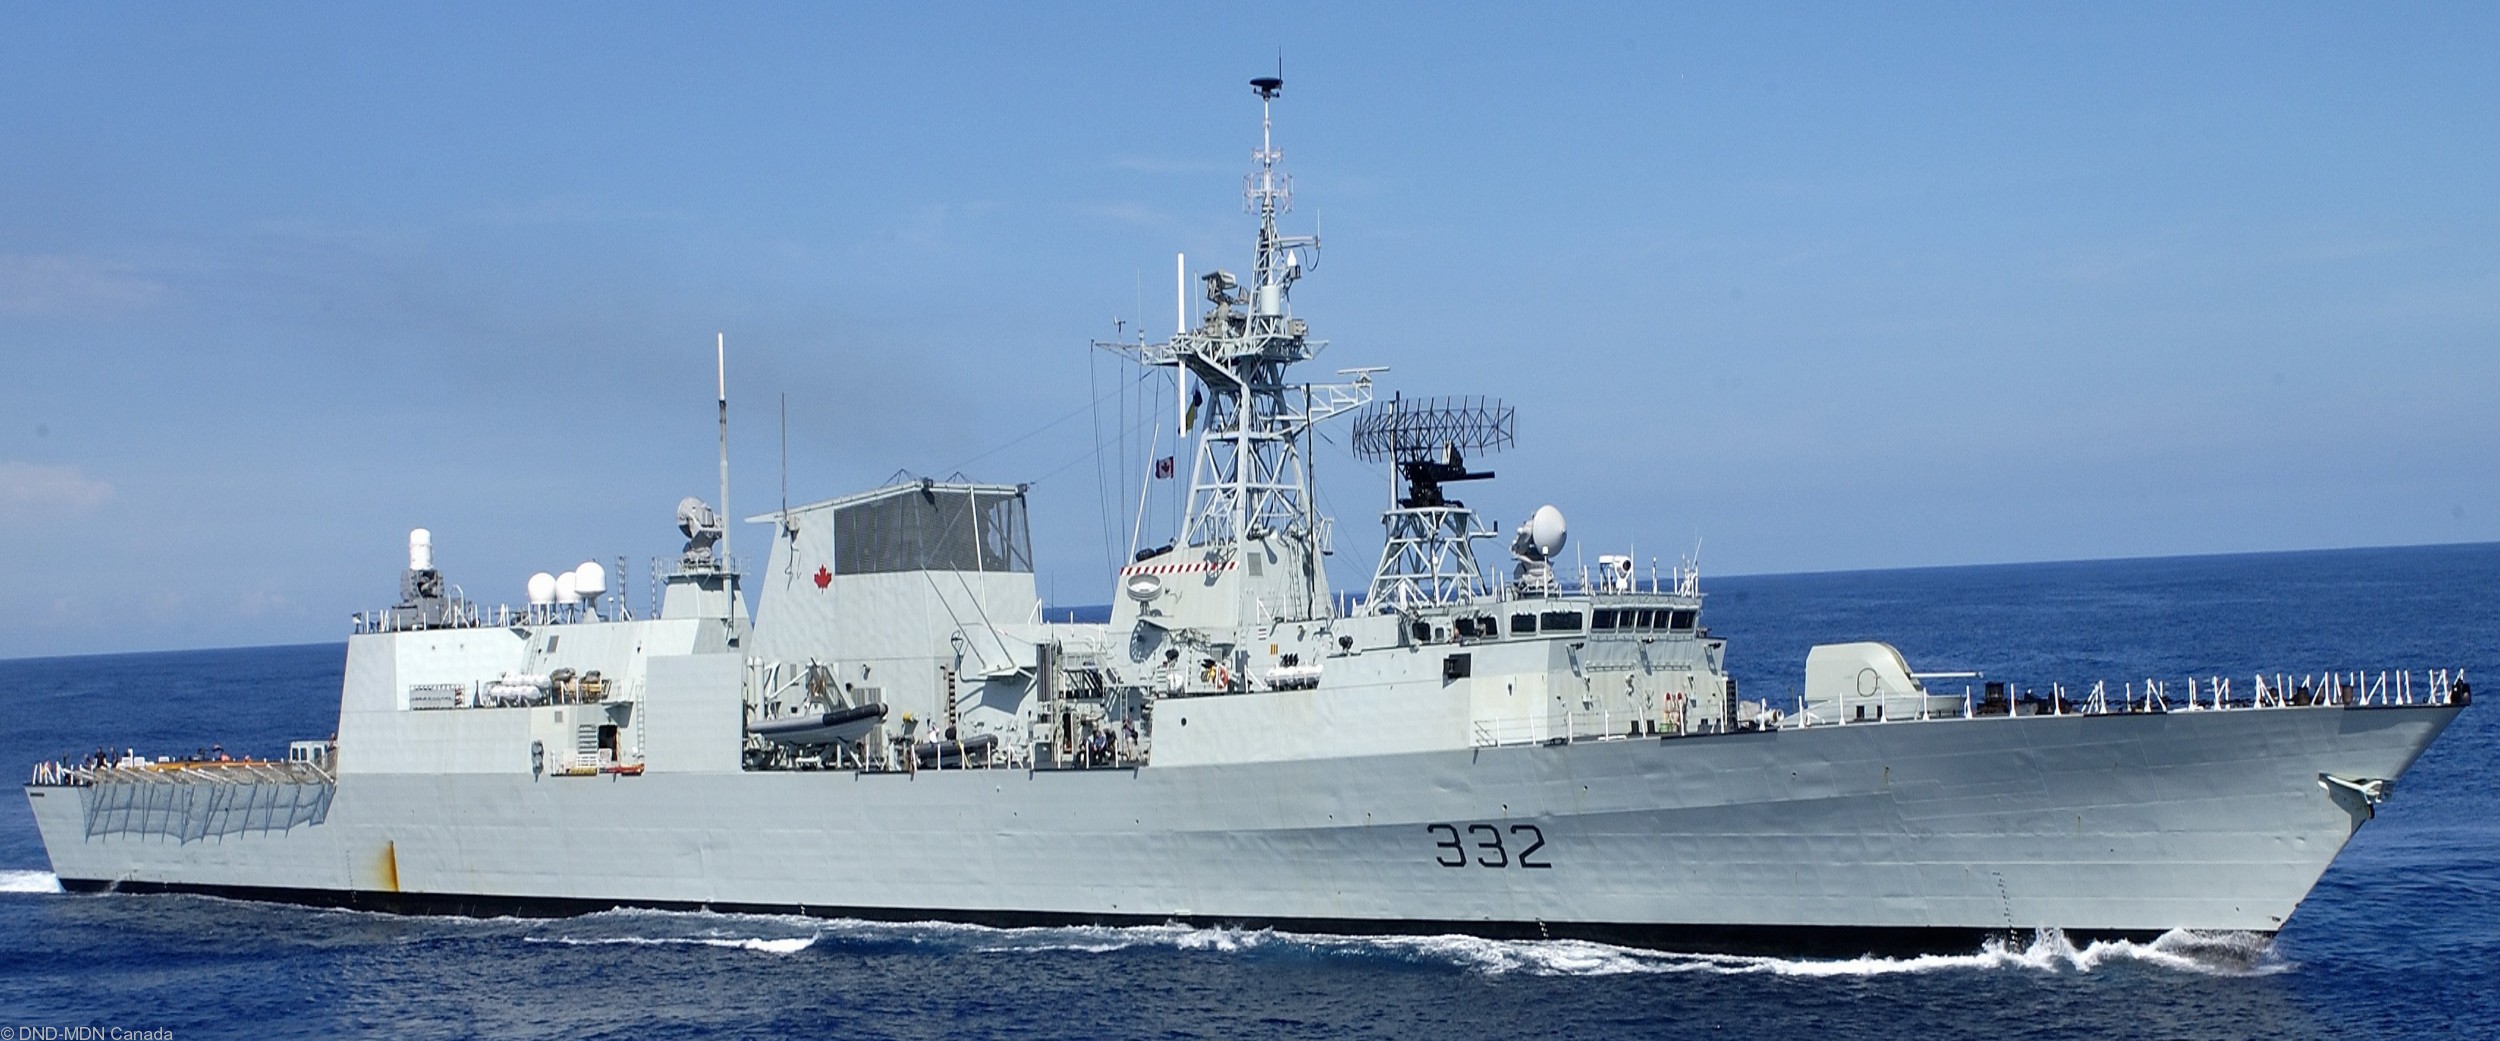 ffh-332 hmcs ville de quebec halifax class helicopter patrol frigate ncsm royal canadian navy 36